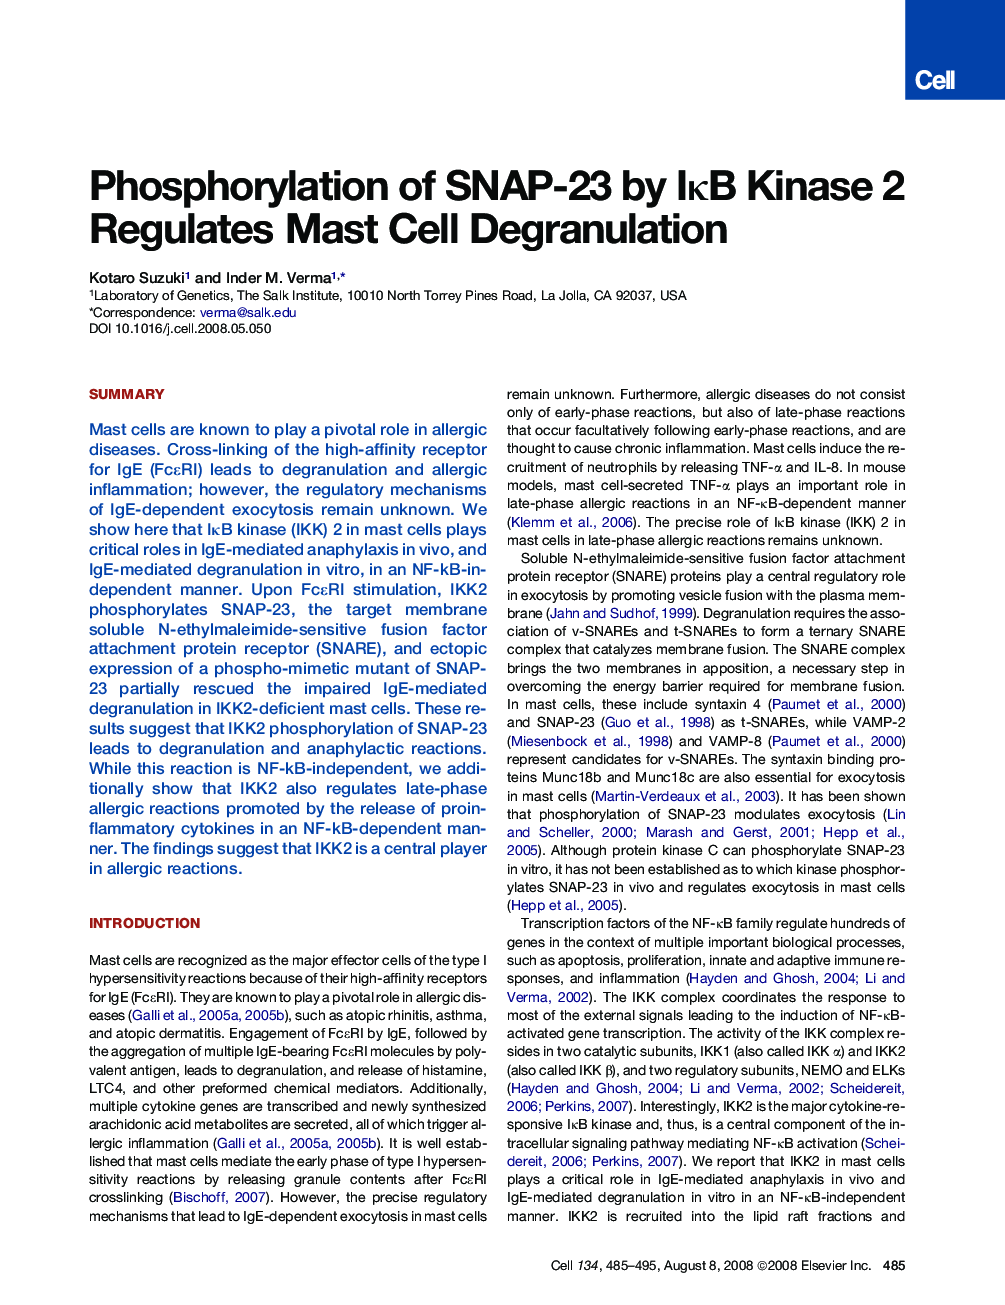 Phosphorylation of SNAP-23 by IκB Kinase 2 Regulates Mast Cell Degranulation